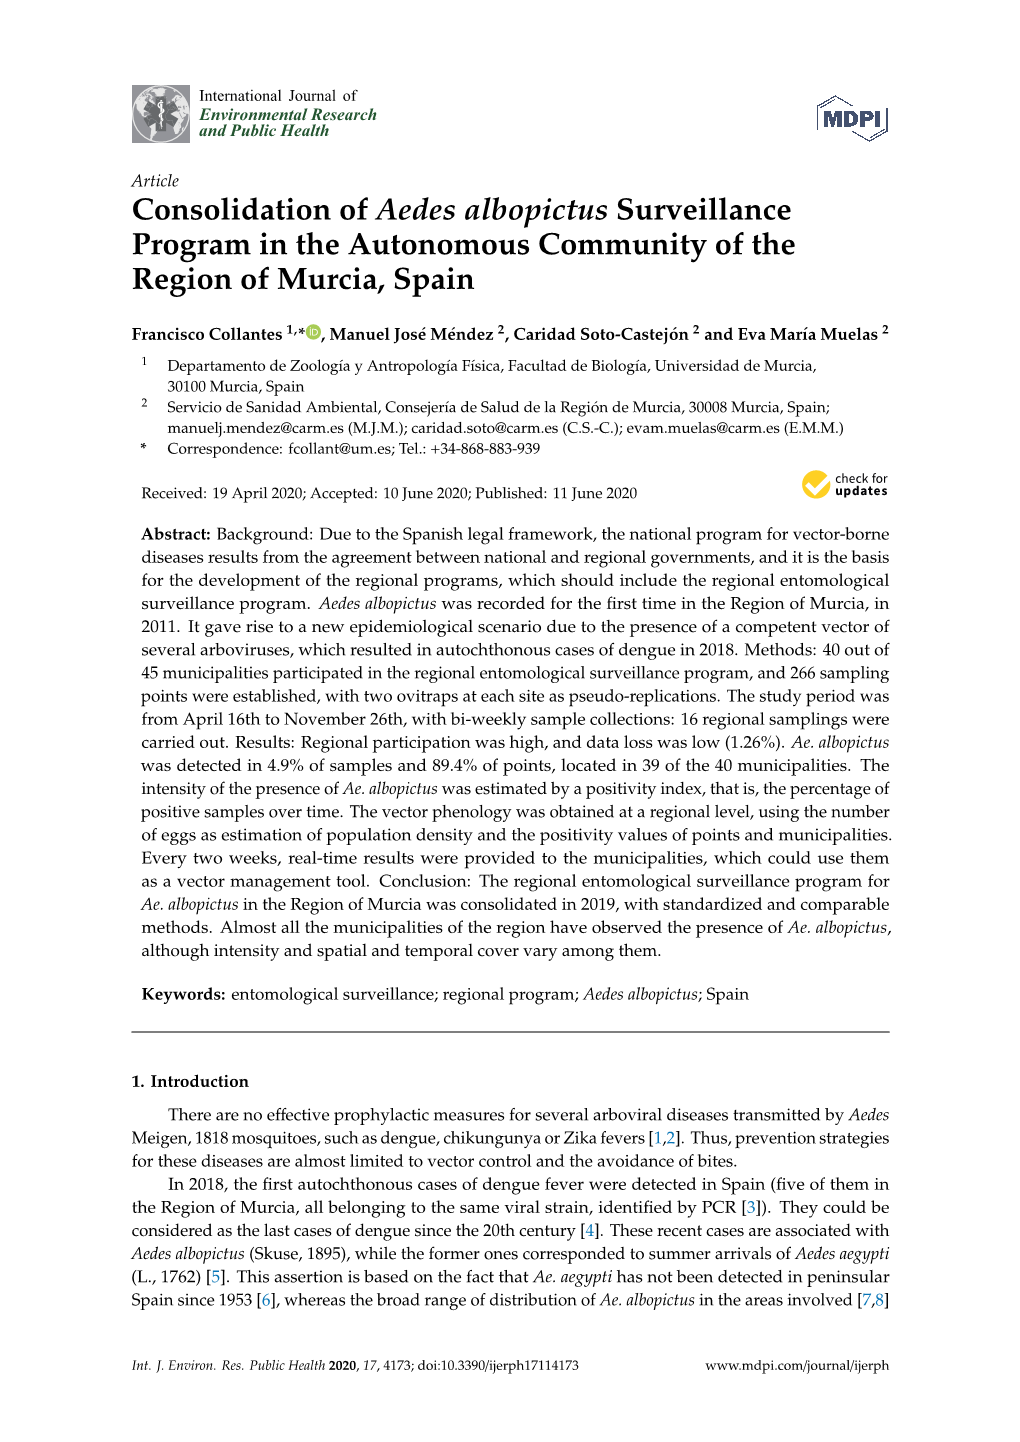 Consolidation of Aedes Albopictus Surveillance Program in the Autonomous Community of the Region of Murcia, Spain